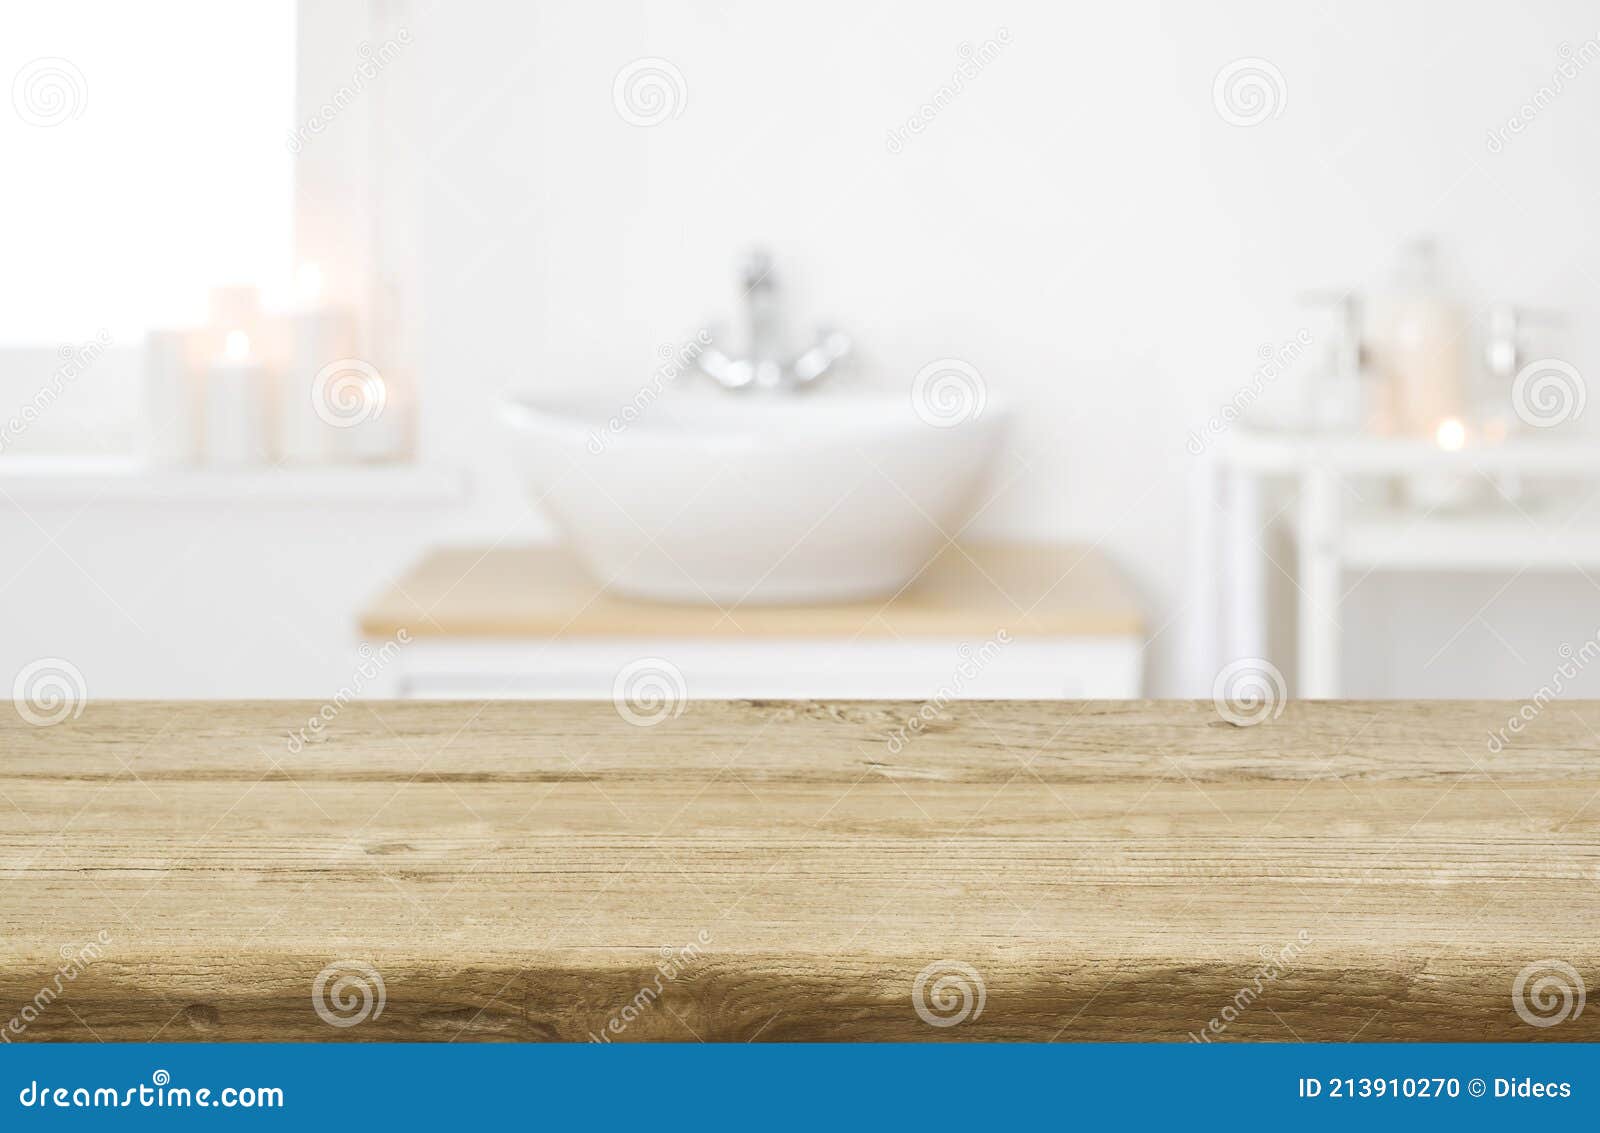 table board before heavily blurred spa salon bathroom shelves background